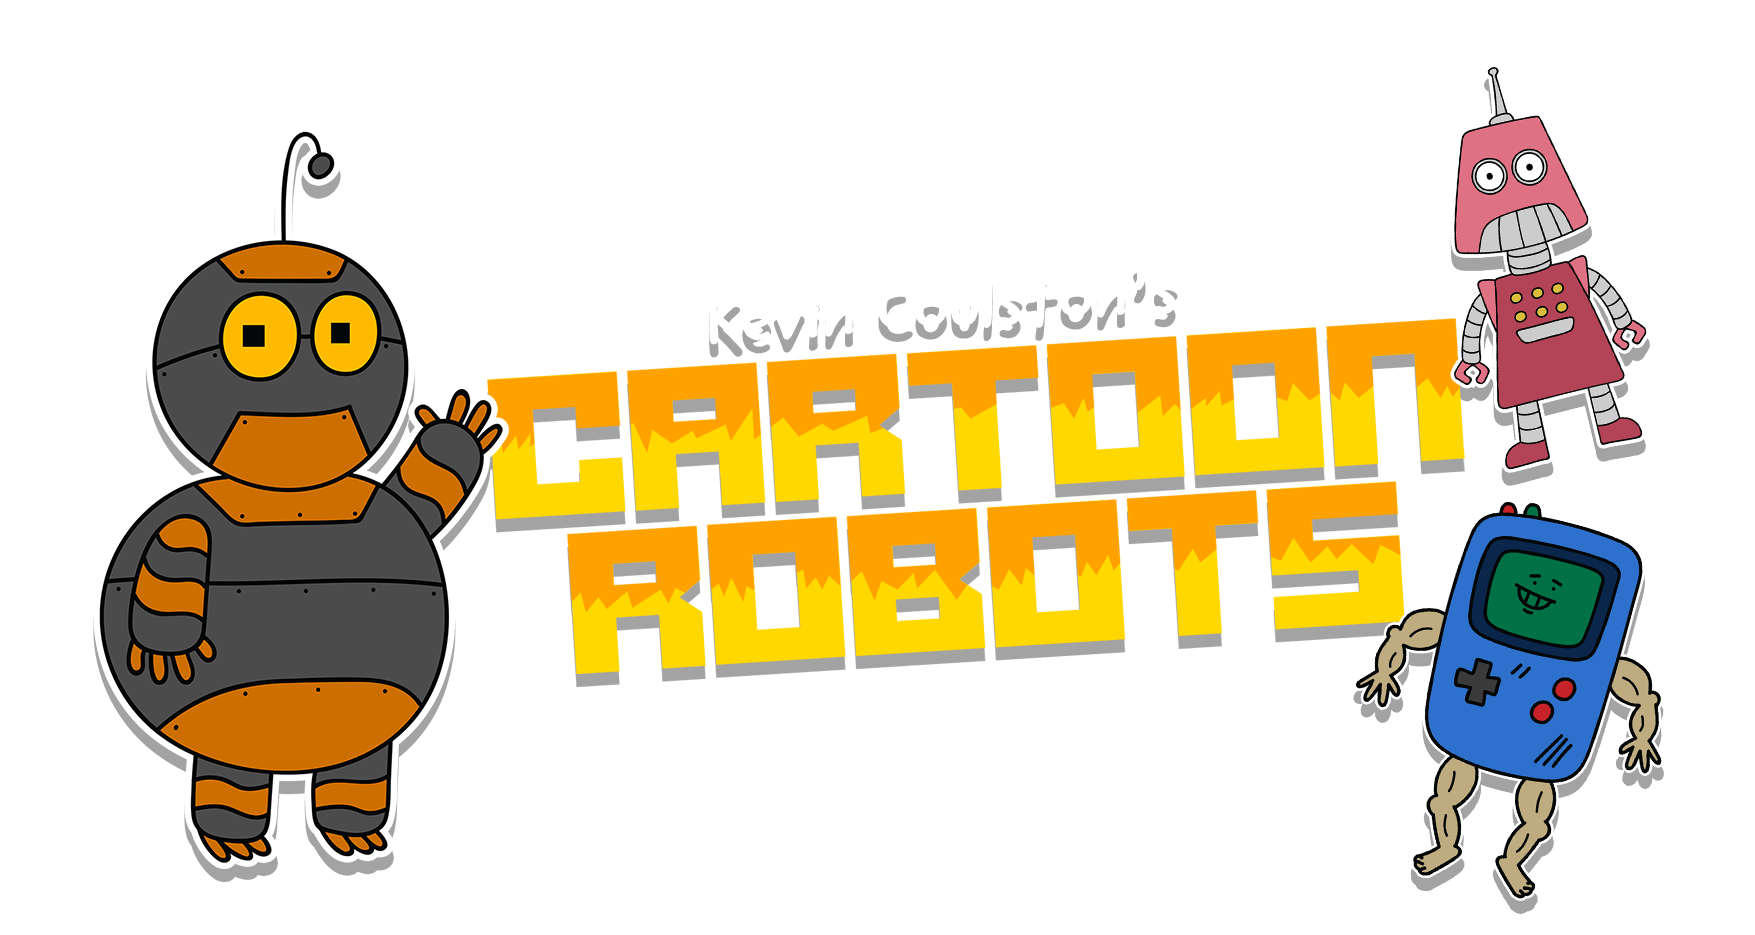 Kevin Coulston's Cartoon Robots Logo